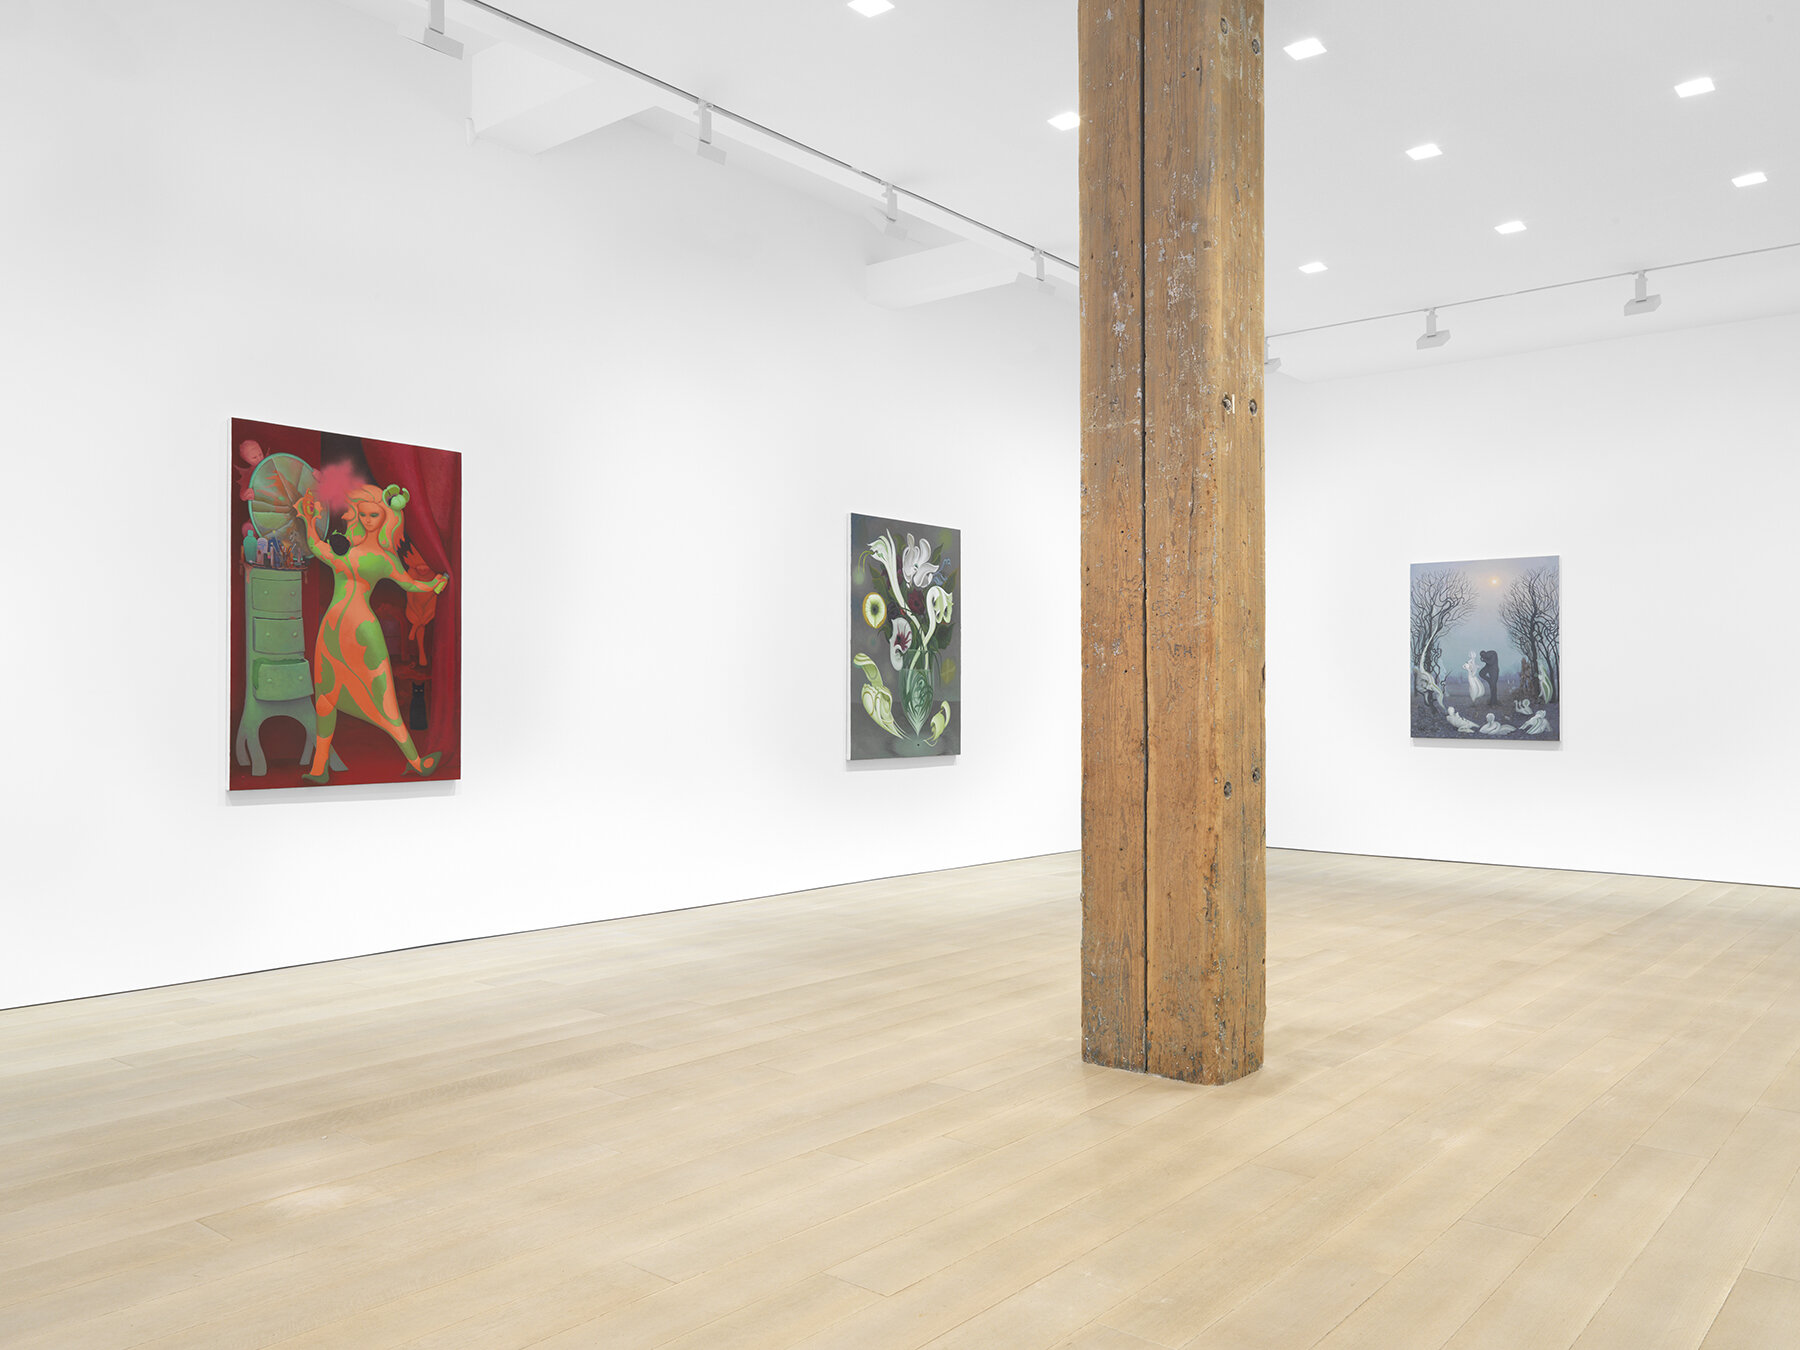 New York, NY: Miles McEnery Gallery, Inka Essenhigh, 15 October – 14 November 2020